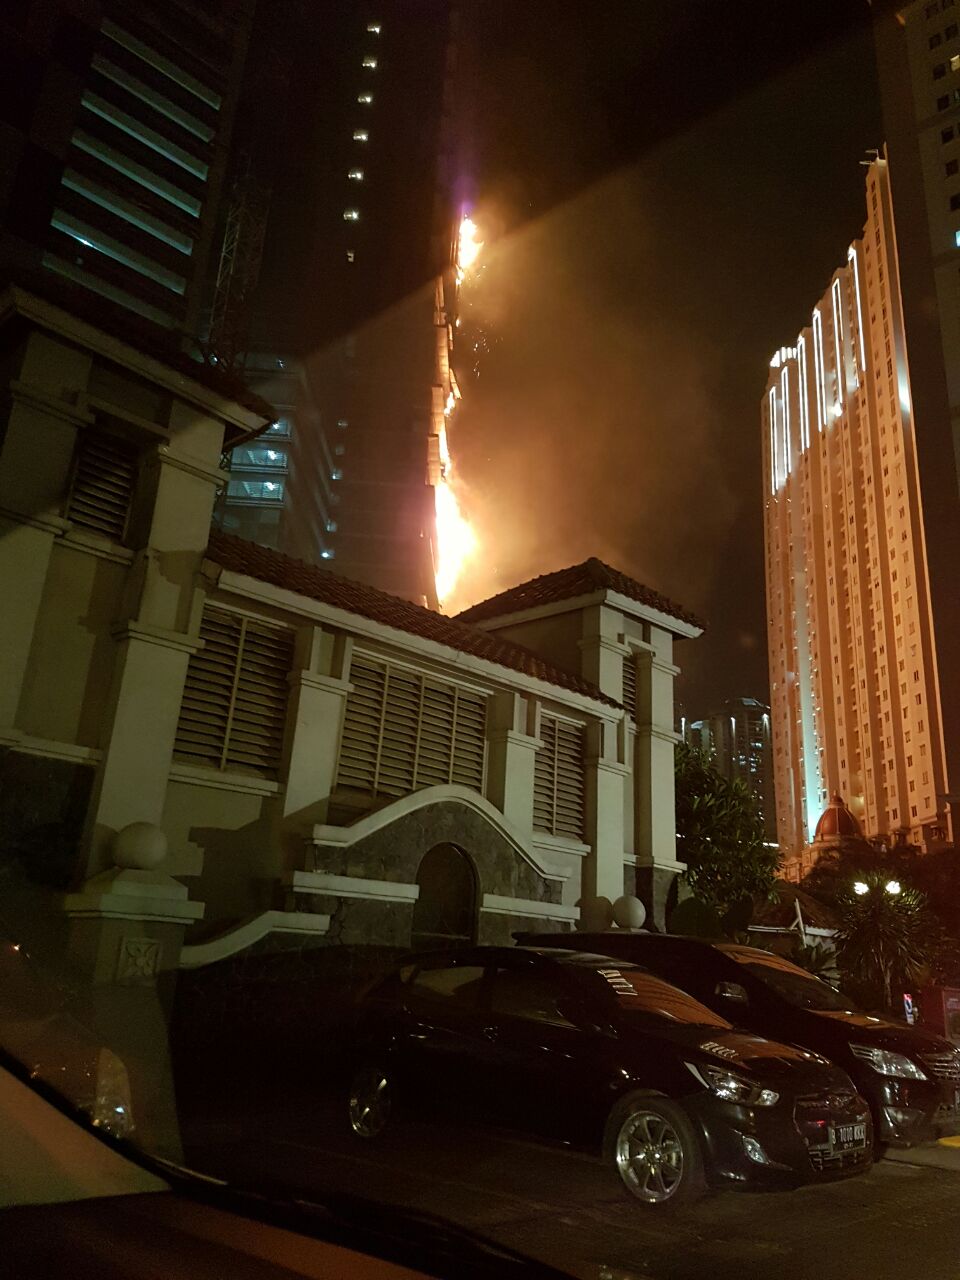 [Video] Massive Fire Burning At Jakarta’s New Shopping Mall Neo Soho